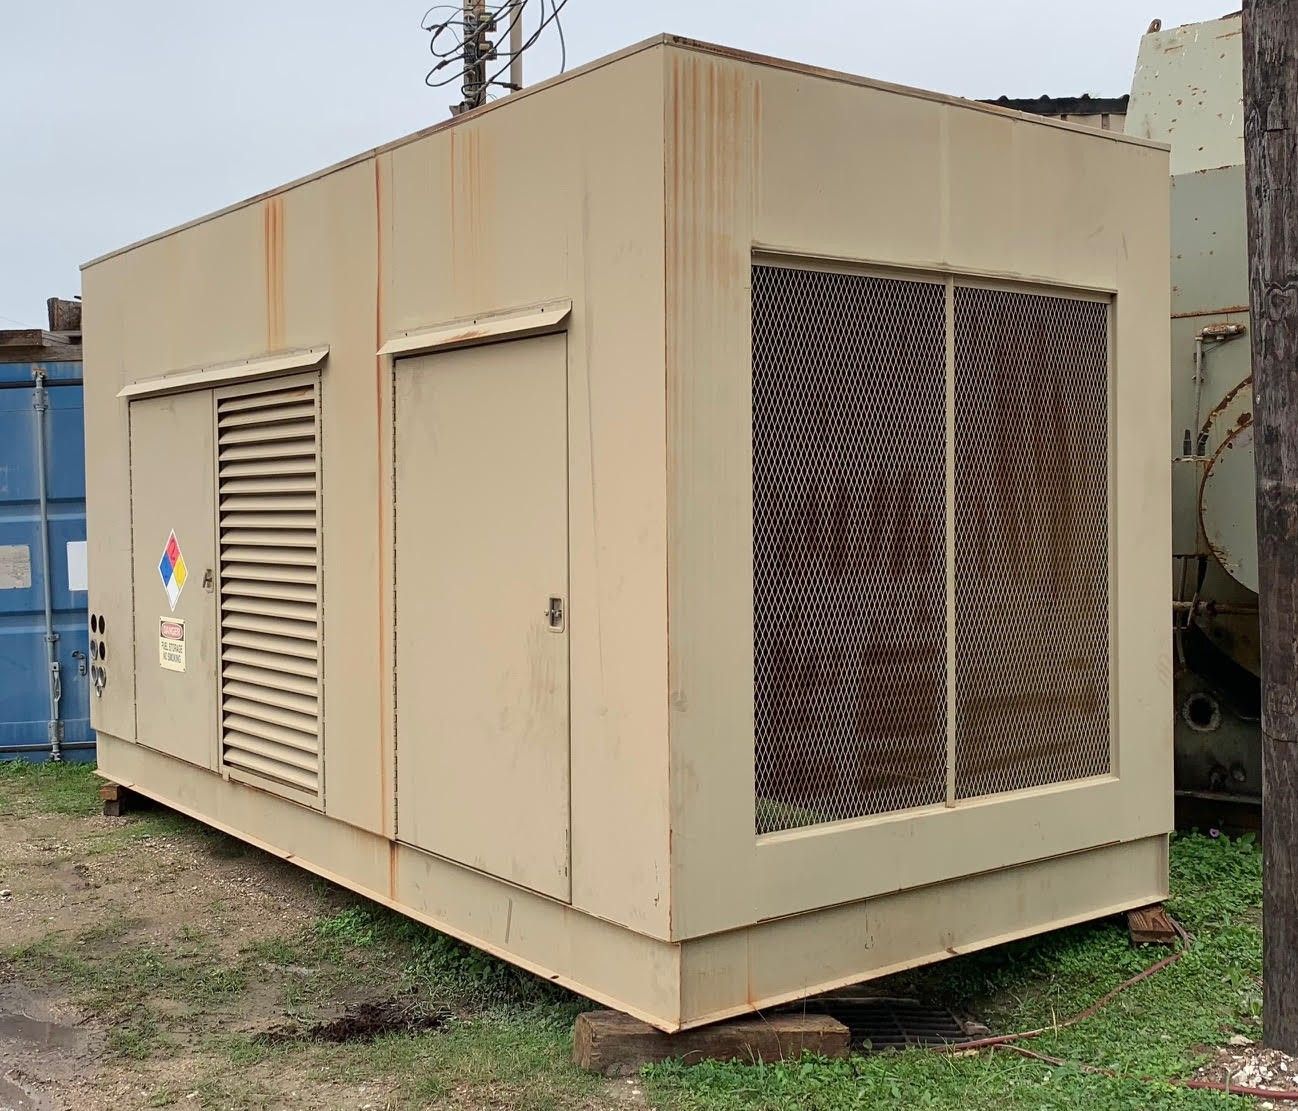 Weatherproof Generator Enclosure for